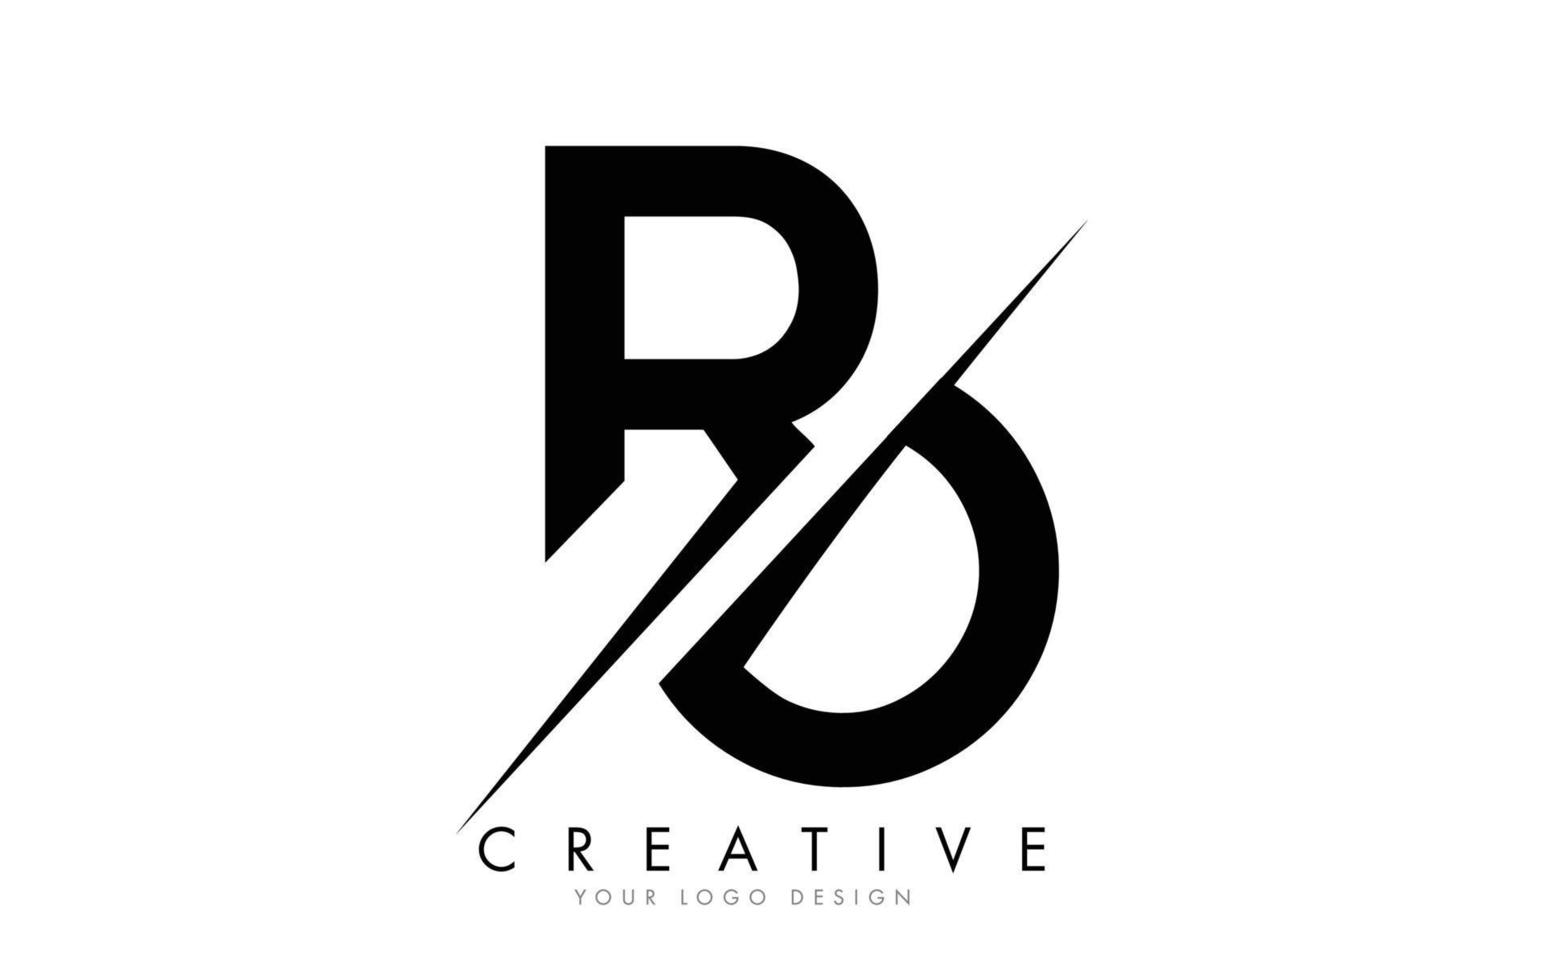 diseño de logotipo de letra ro ro con un corte creativo. vector